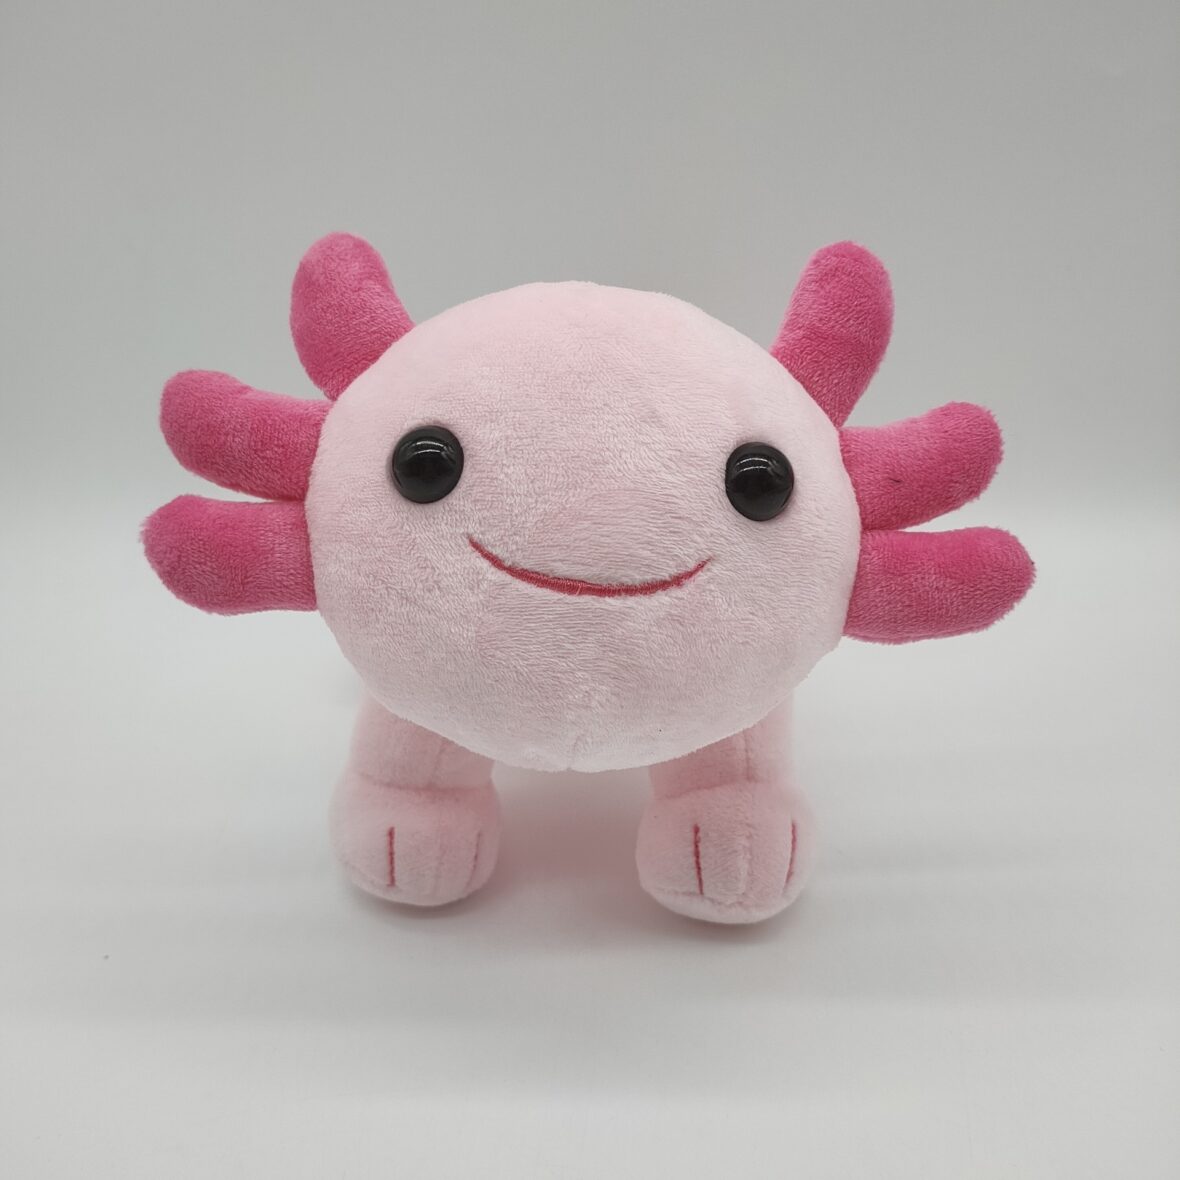 Ambystoma Mexicanum Pink Axolotl Soft Stuffed Plush Toy